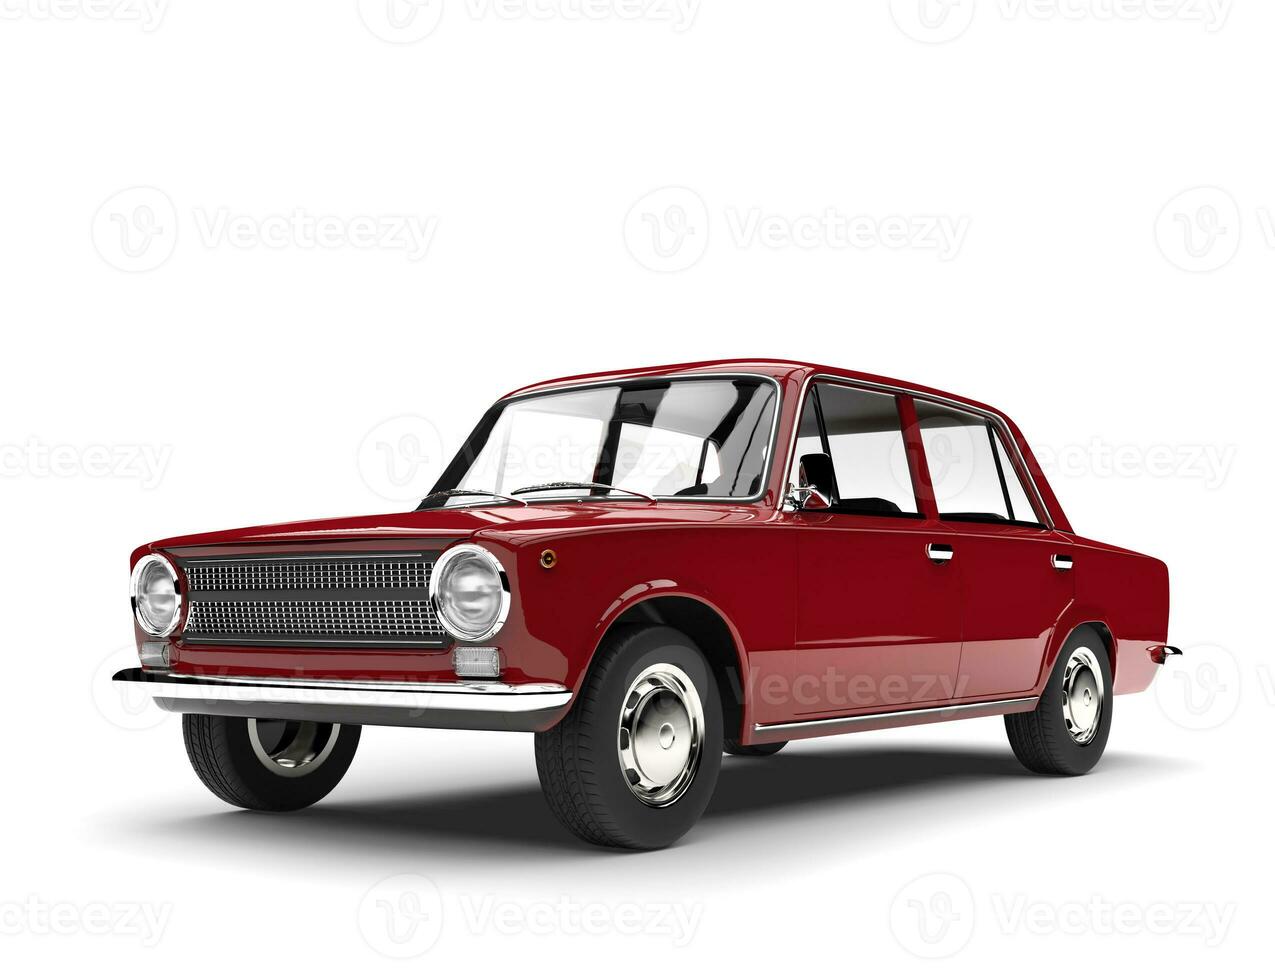 metálico vermelho soviético era vintage carro foto